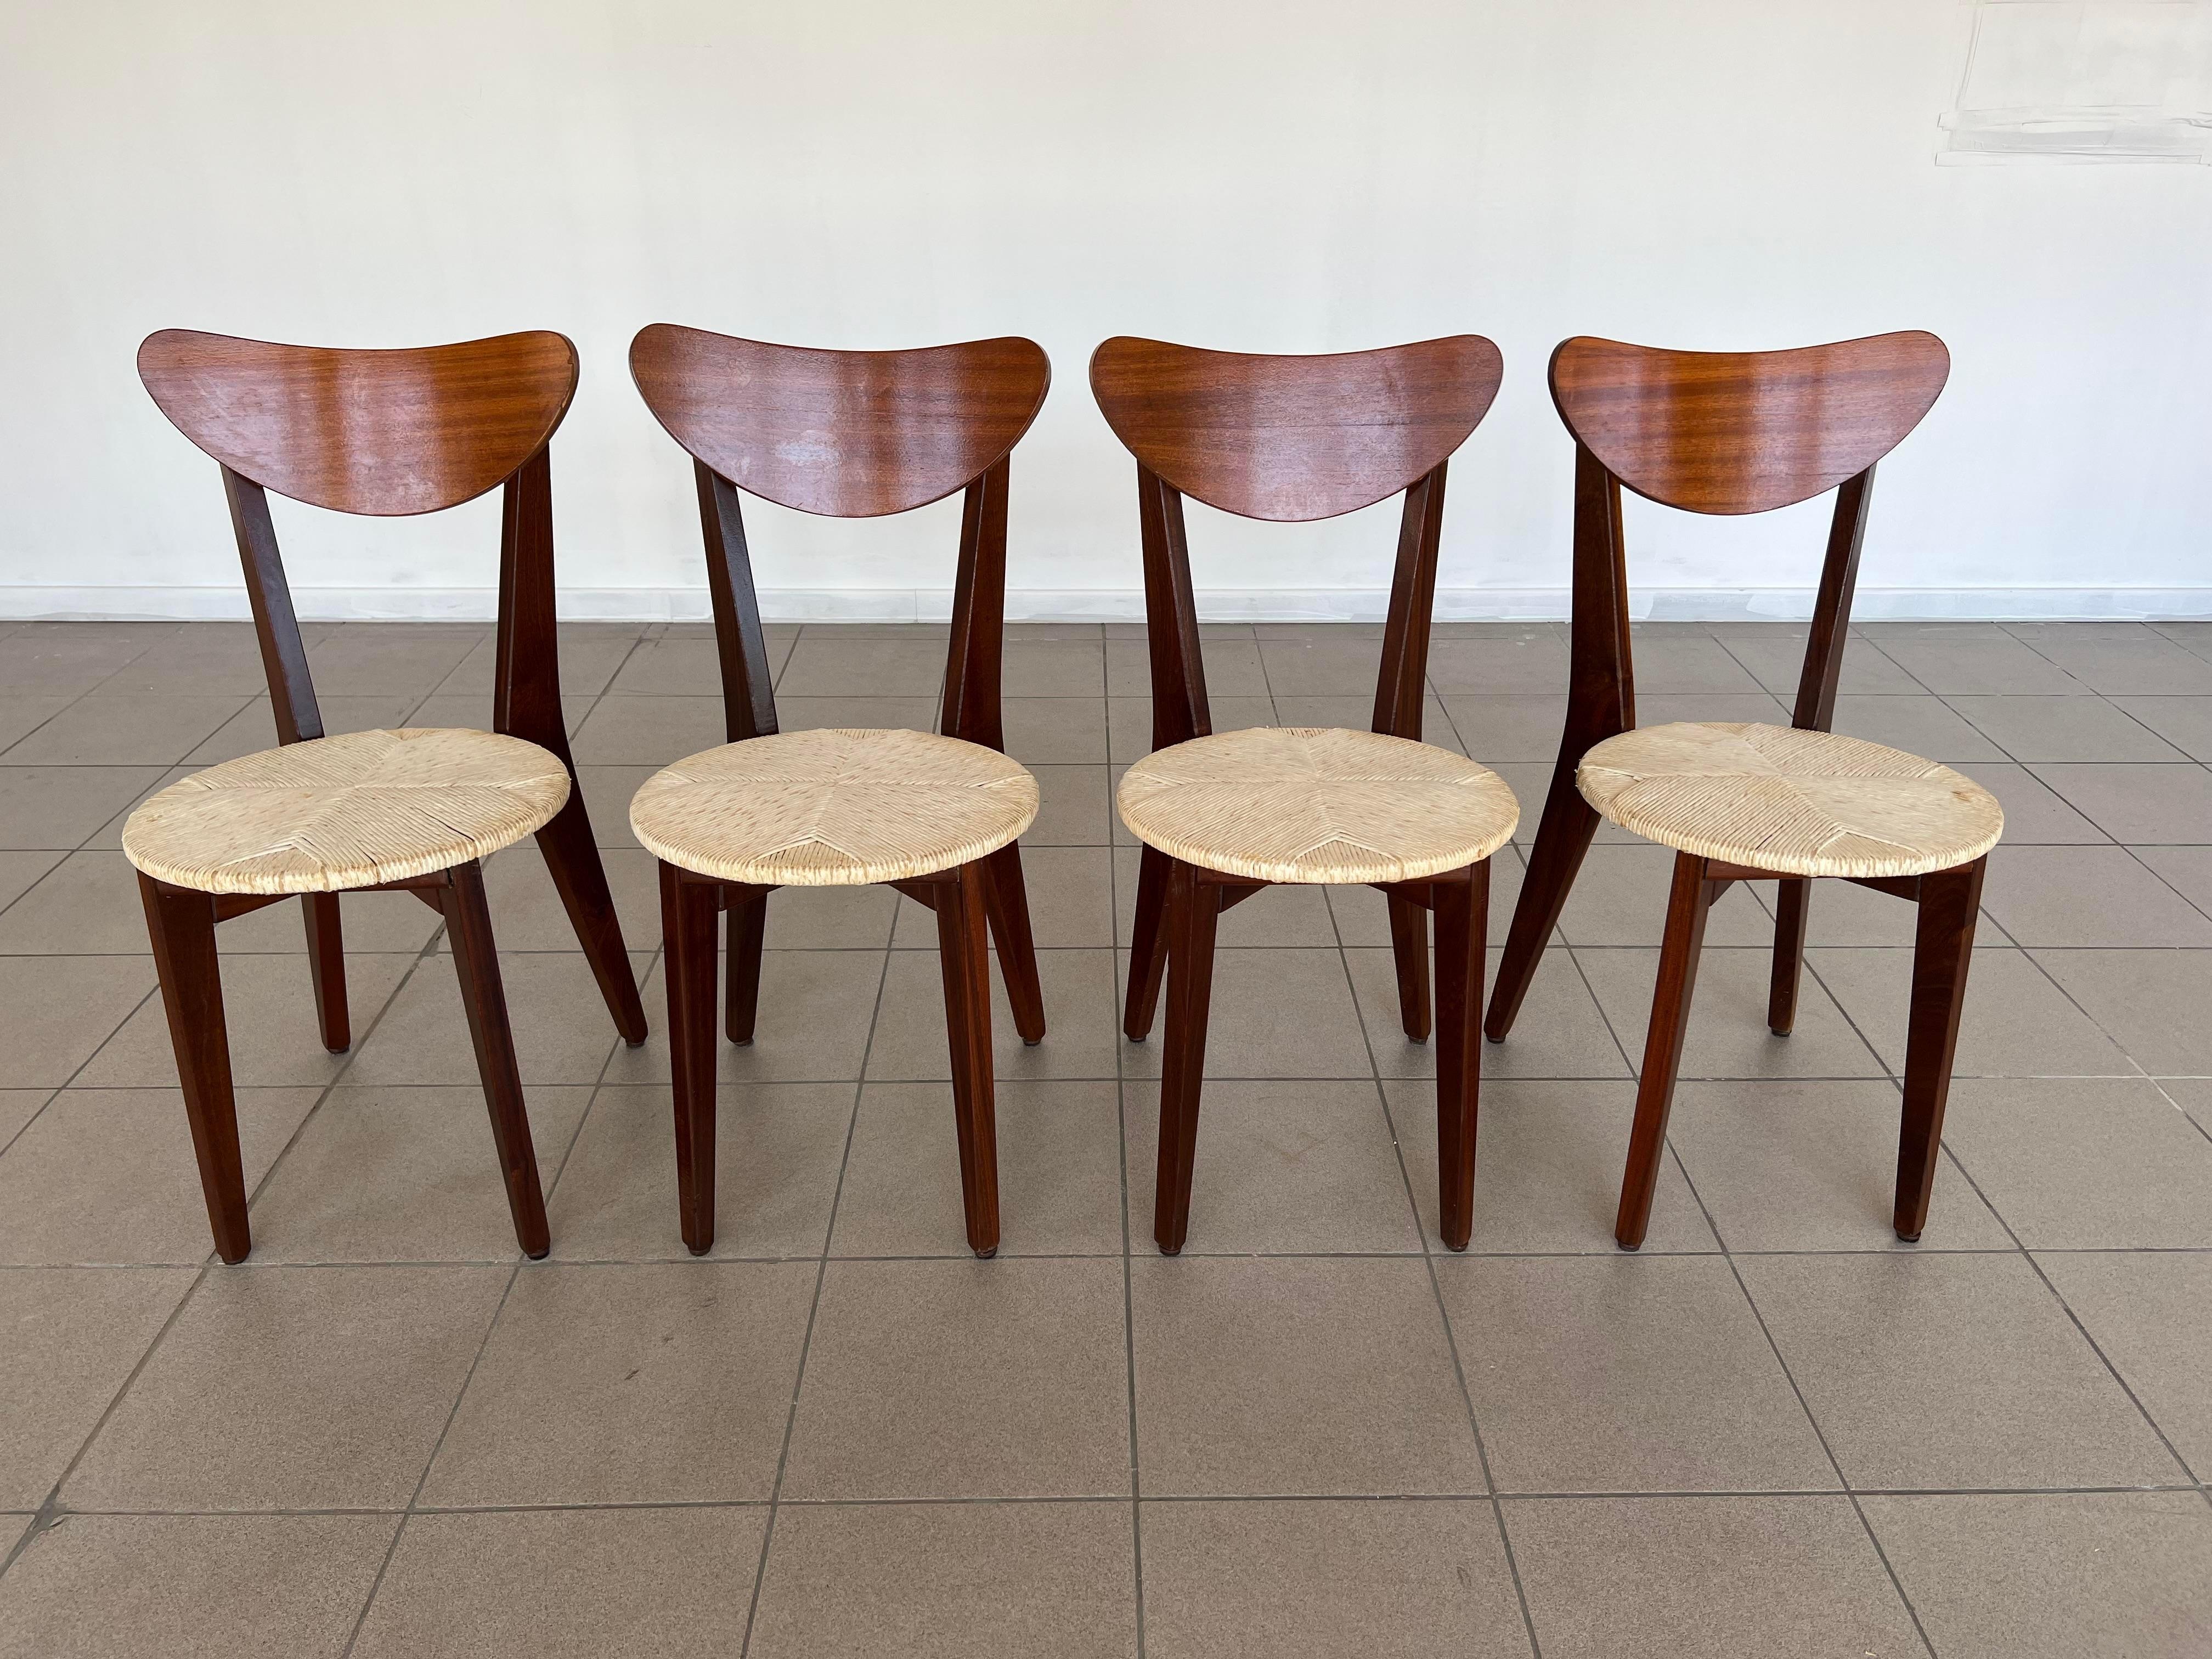 Dutch Rare Mid-Century Modern Set of 4 Dining Chairs by Louis Van Teeffelen, 1960s